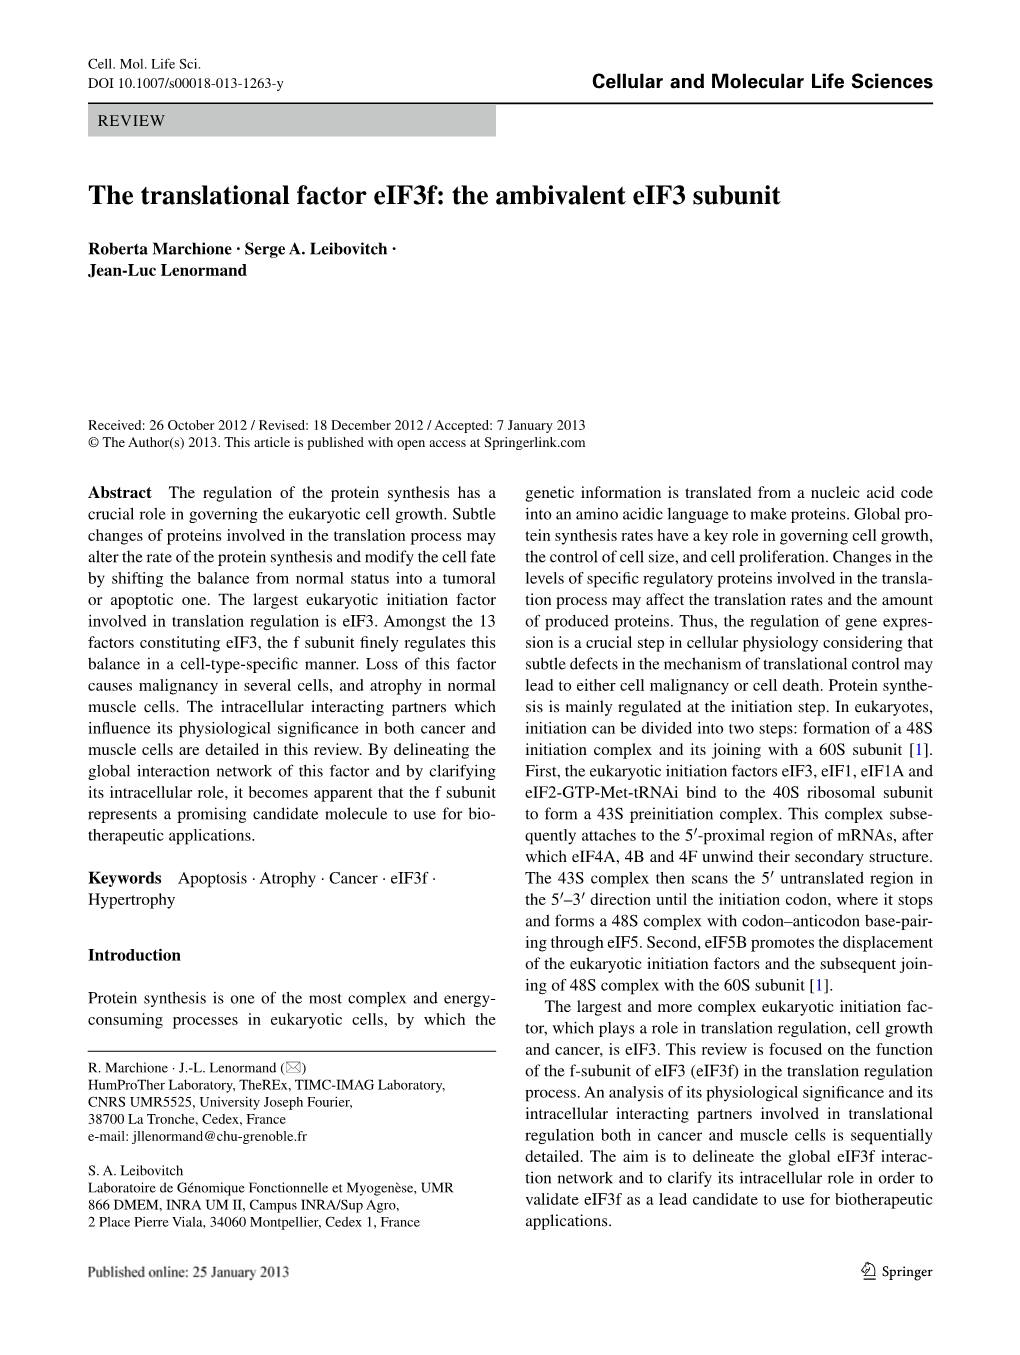 The Translational Factor Eif3f: the Ambivalent Eif3 Subunit